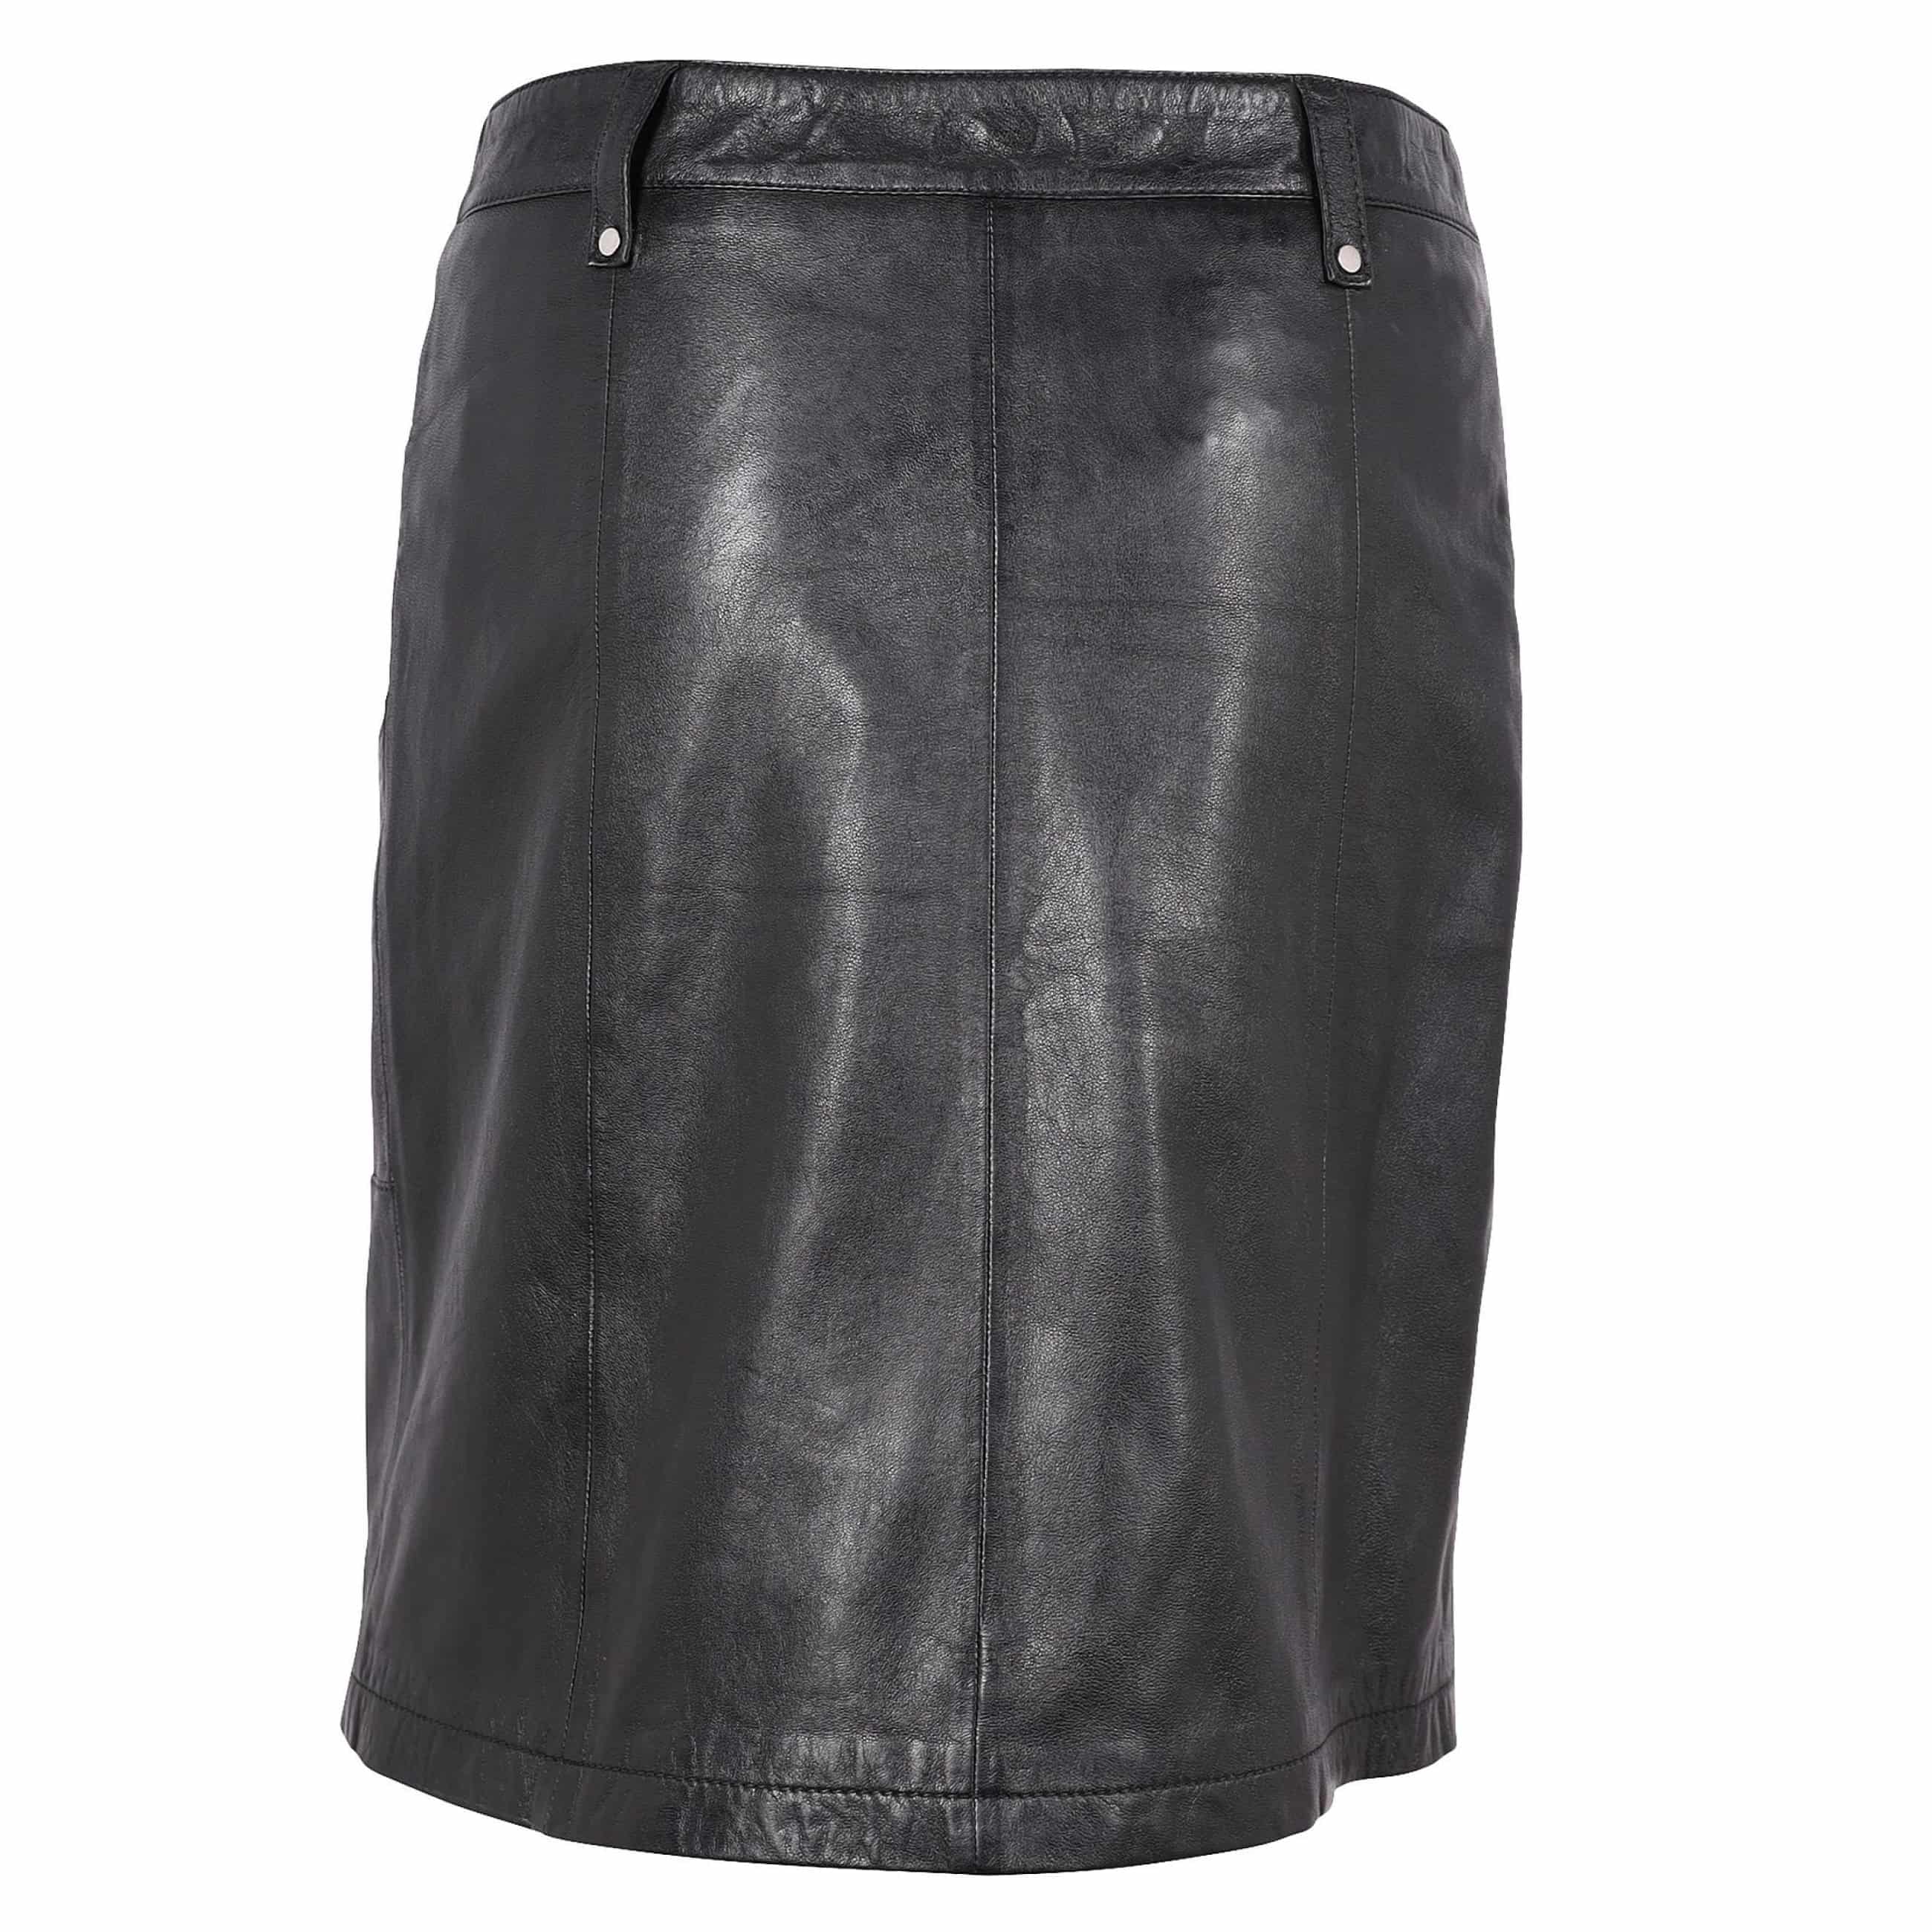 Mauritius Seela Leather Skirt in Black 